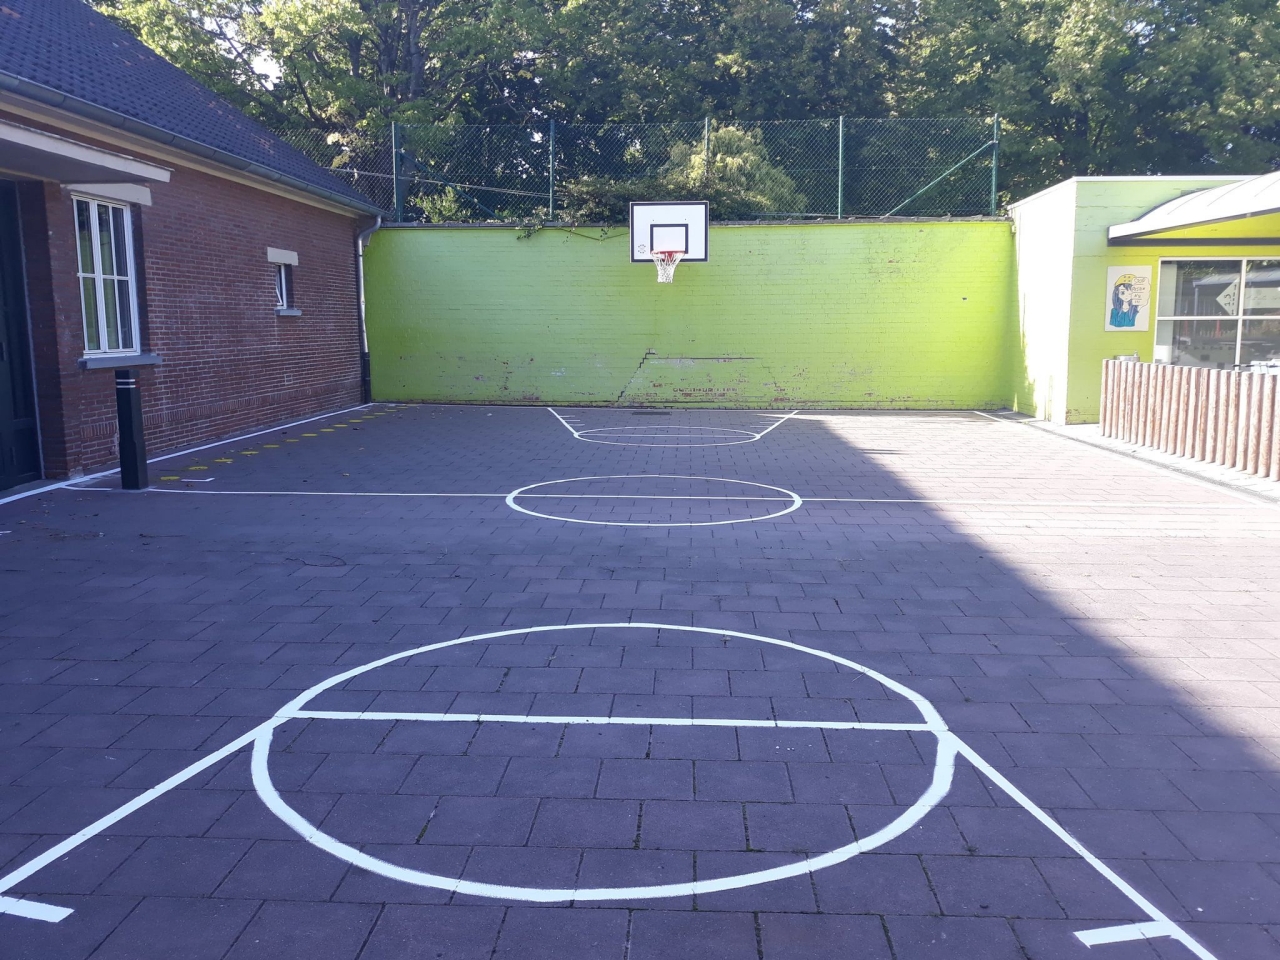 Basketbalplein grote speelplaats